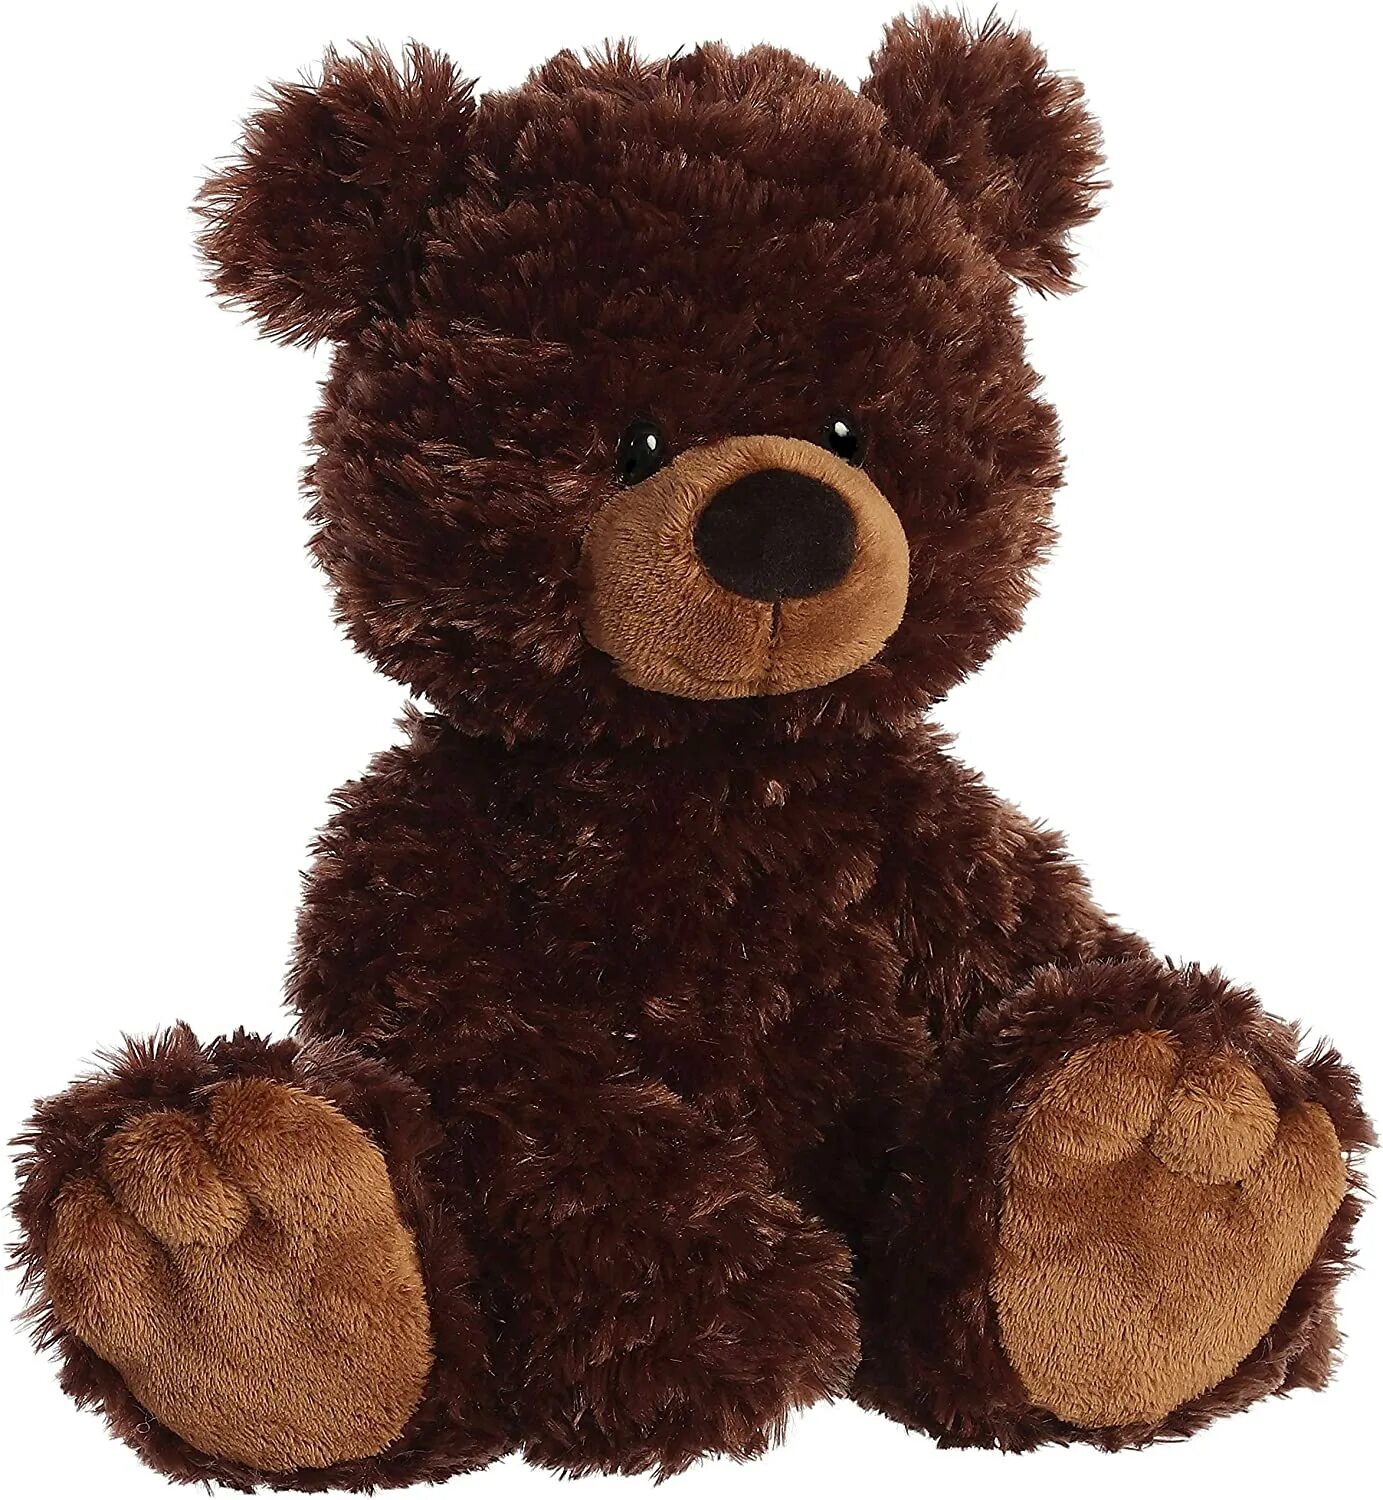 A brown teddy bear. Brown Teddy. Коричневая Teddy. Brown Teddy Bear. Brown Teddy Bear Toy.